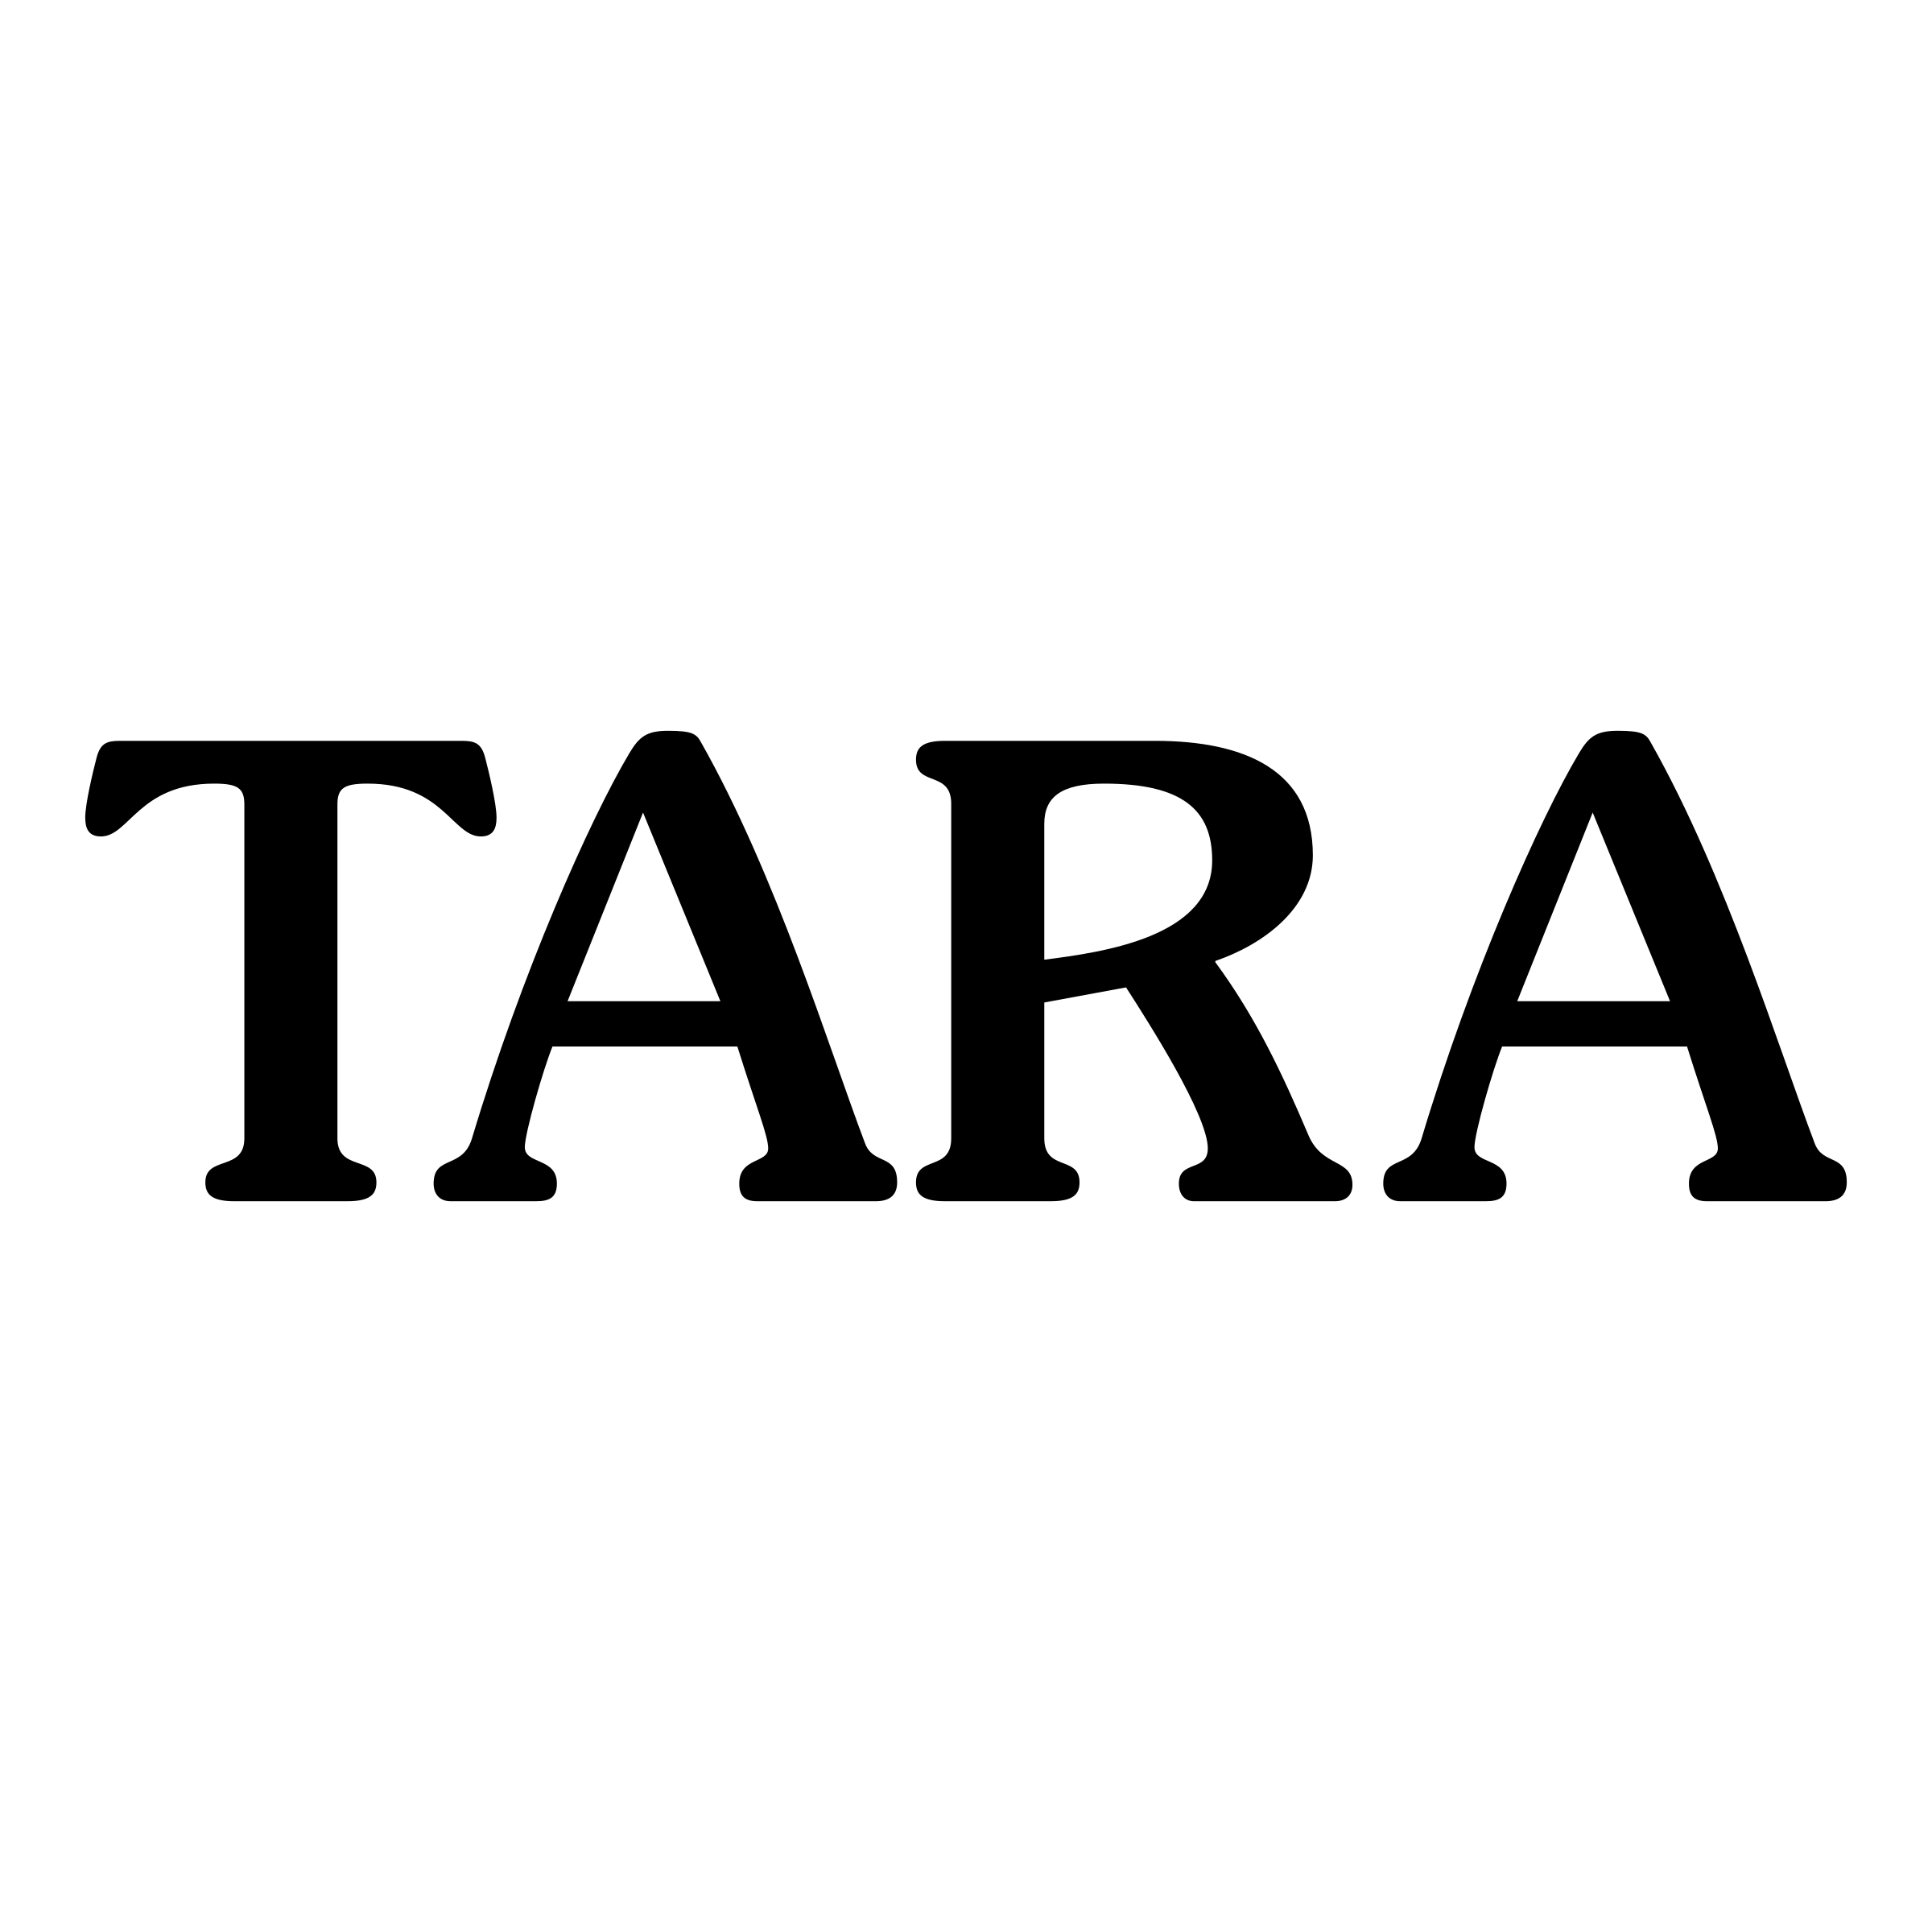 Tara Logo - Tara Logo PNG Transparent & SVG Vector - Freebie Supply